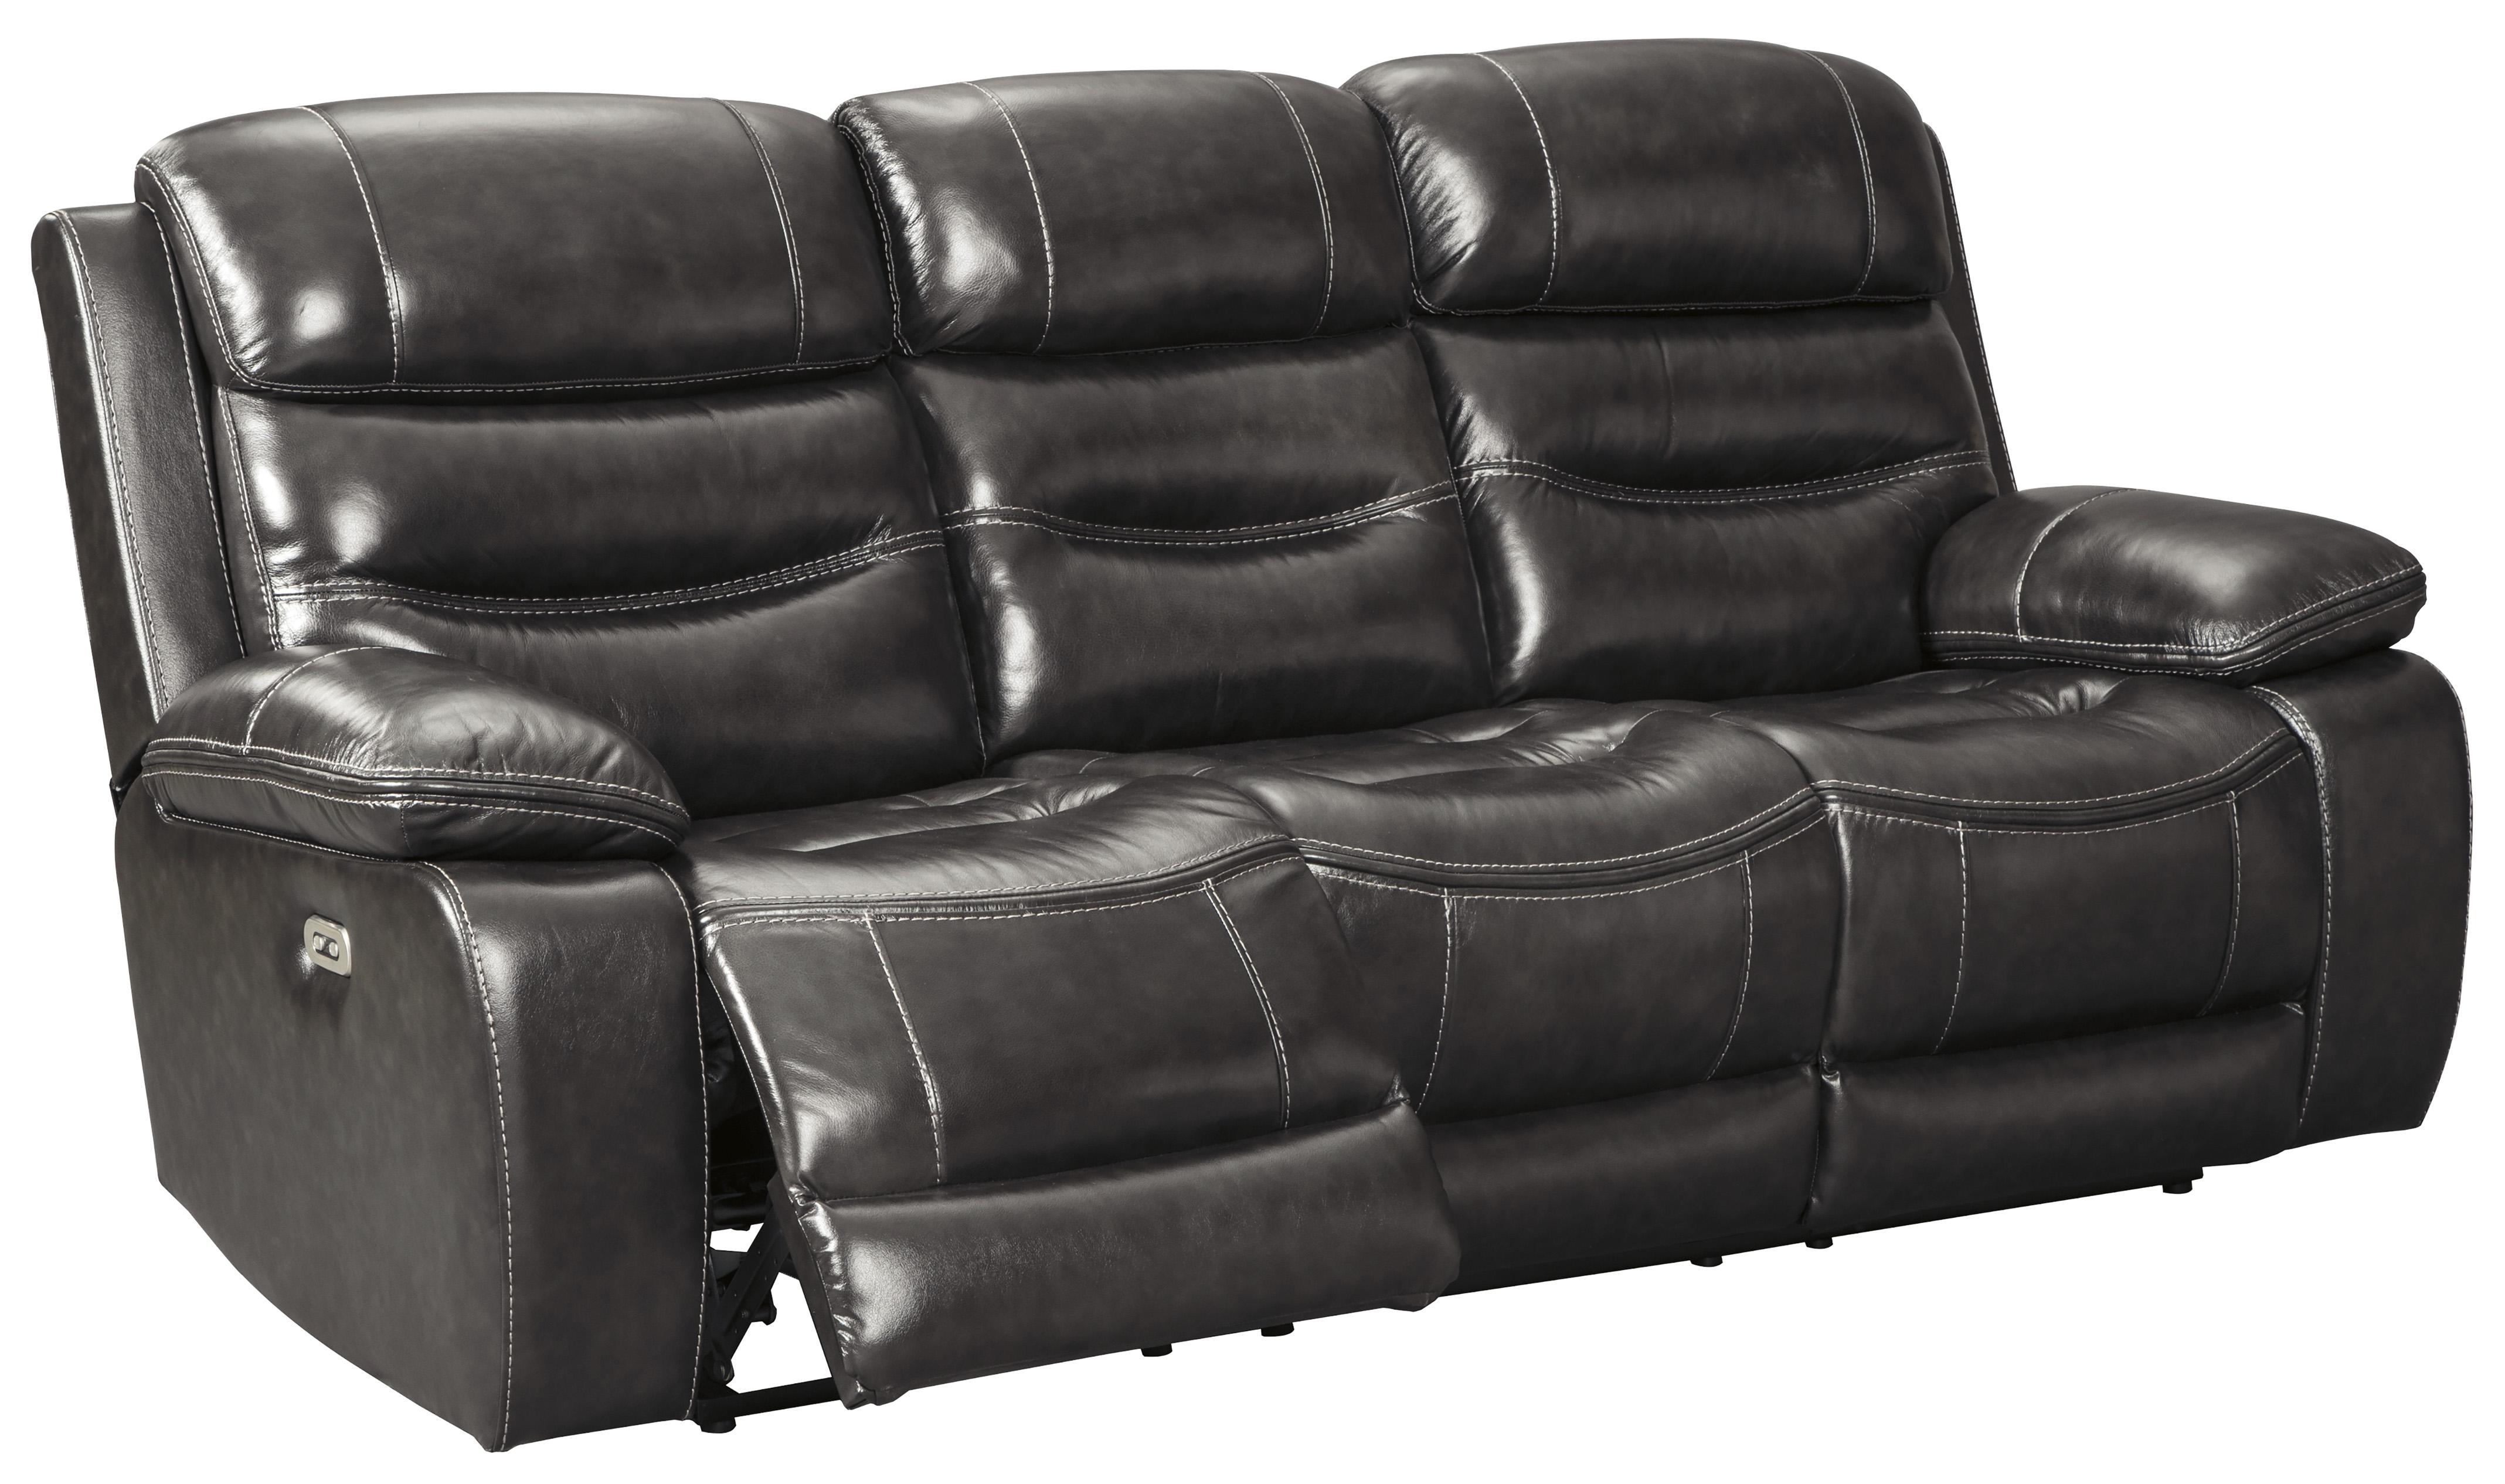 

    
77004-15-18-Sofa set-2 Ashley Furniture Reclining Living Room Set
